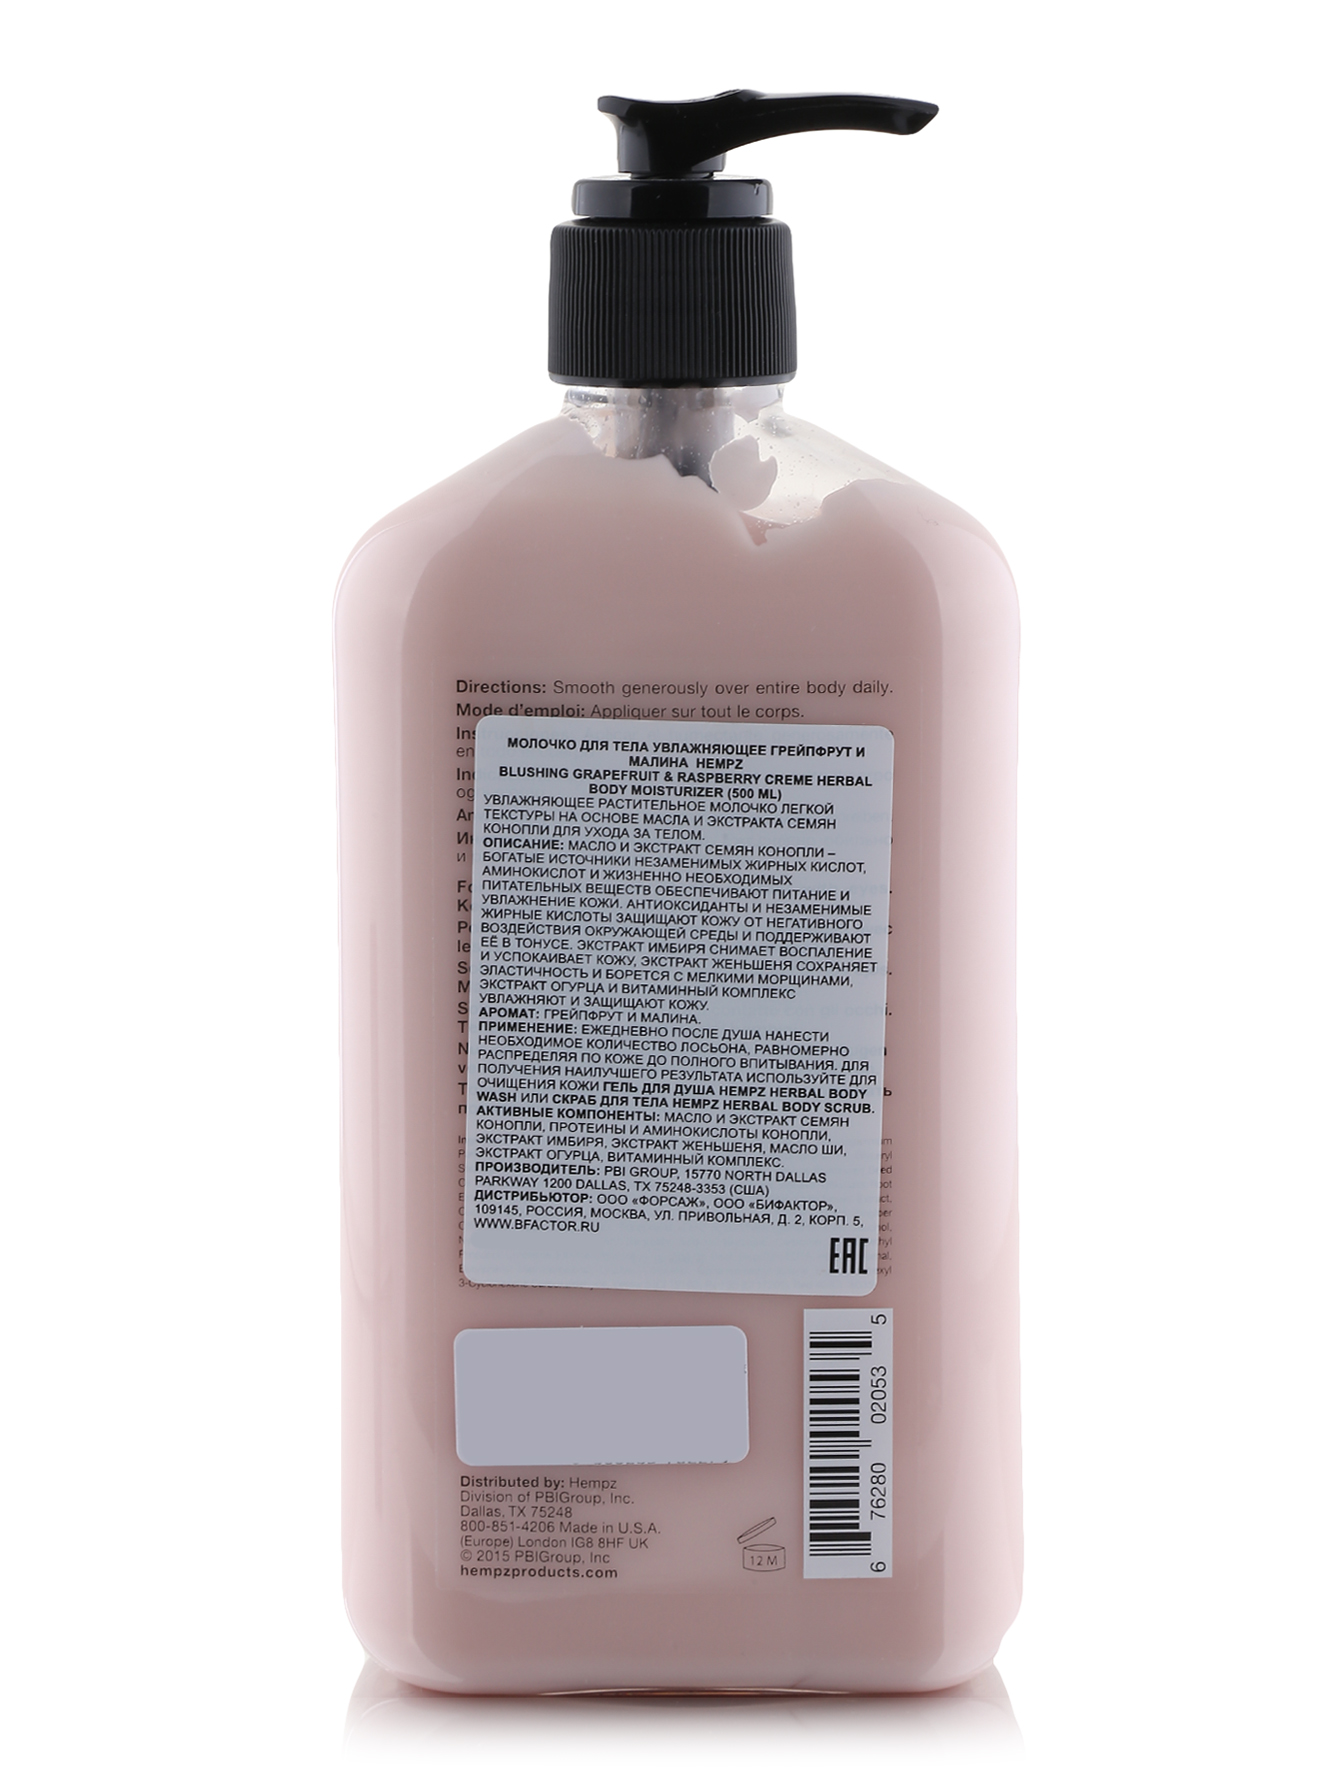  Молочко для тела увлажняющее Грейпфрут и Малина - Body Care, 500ml - Обтравка1